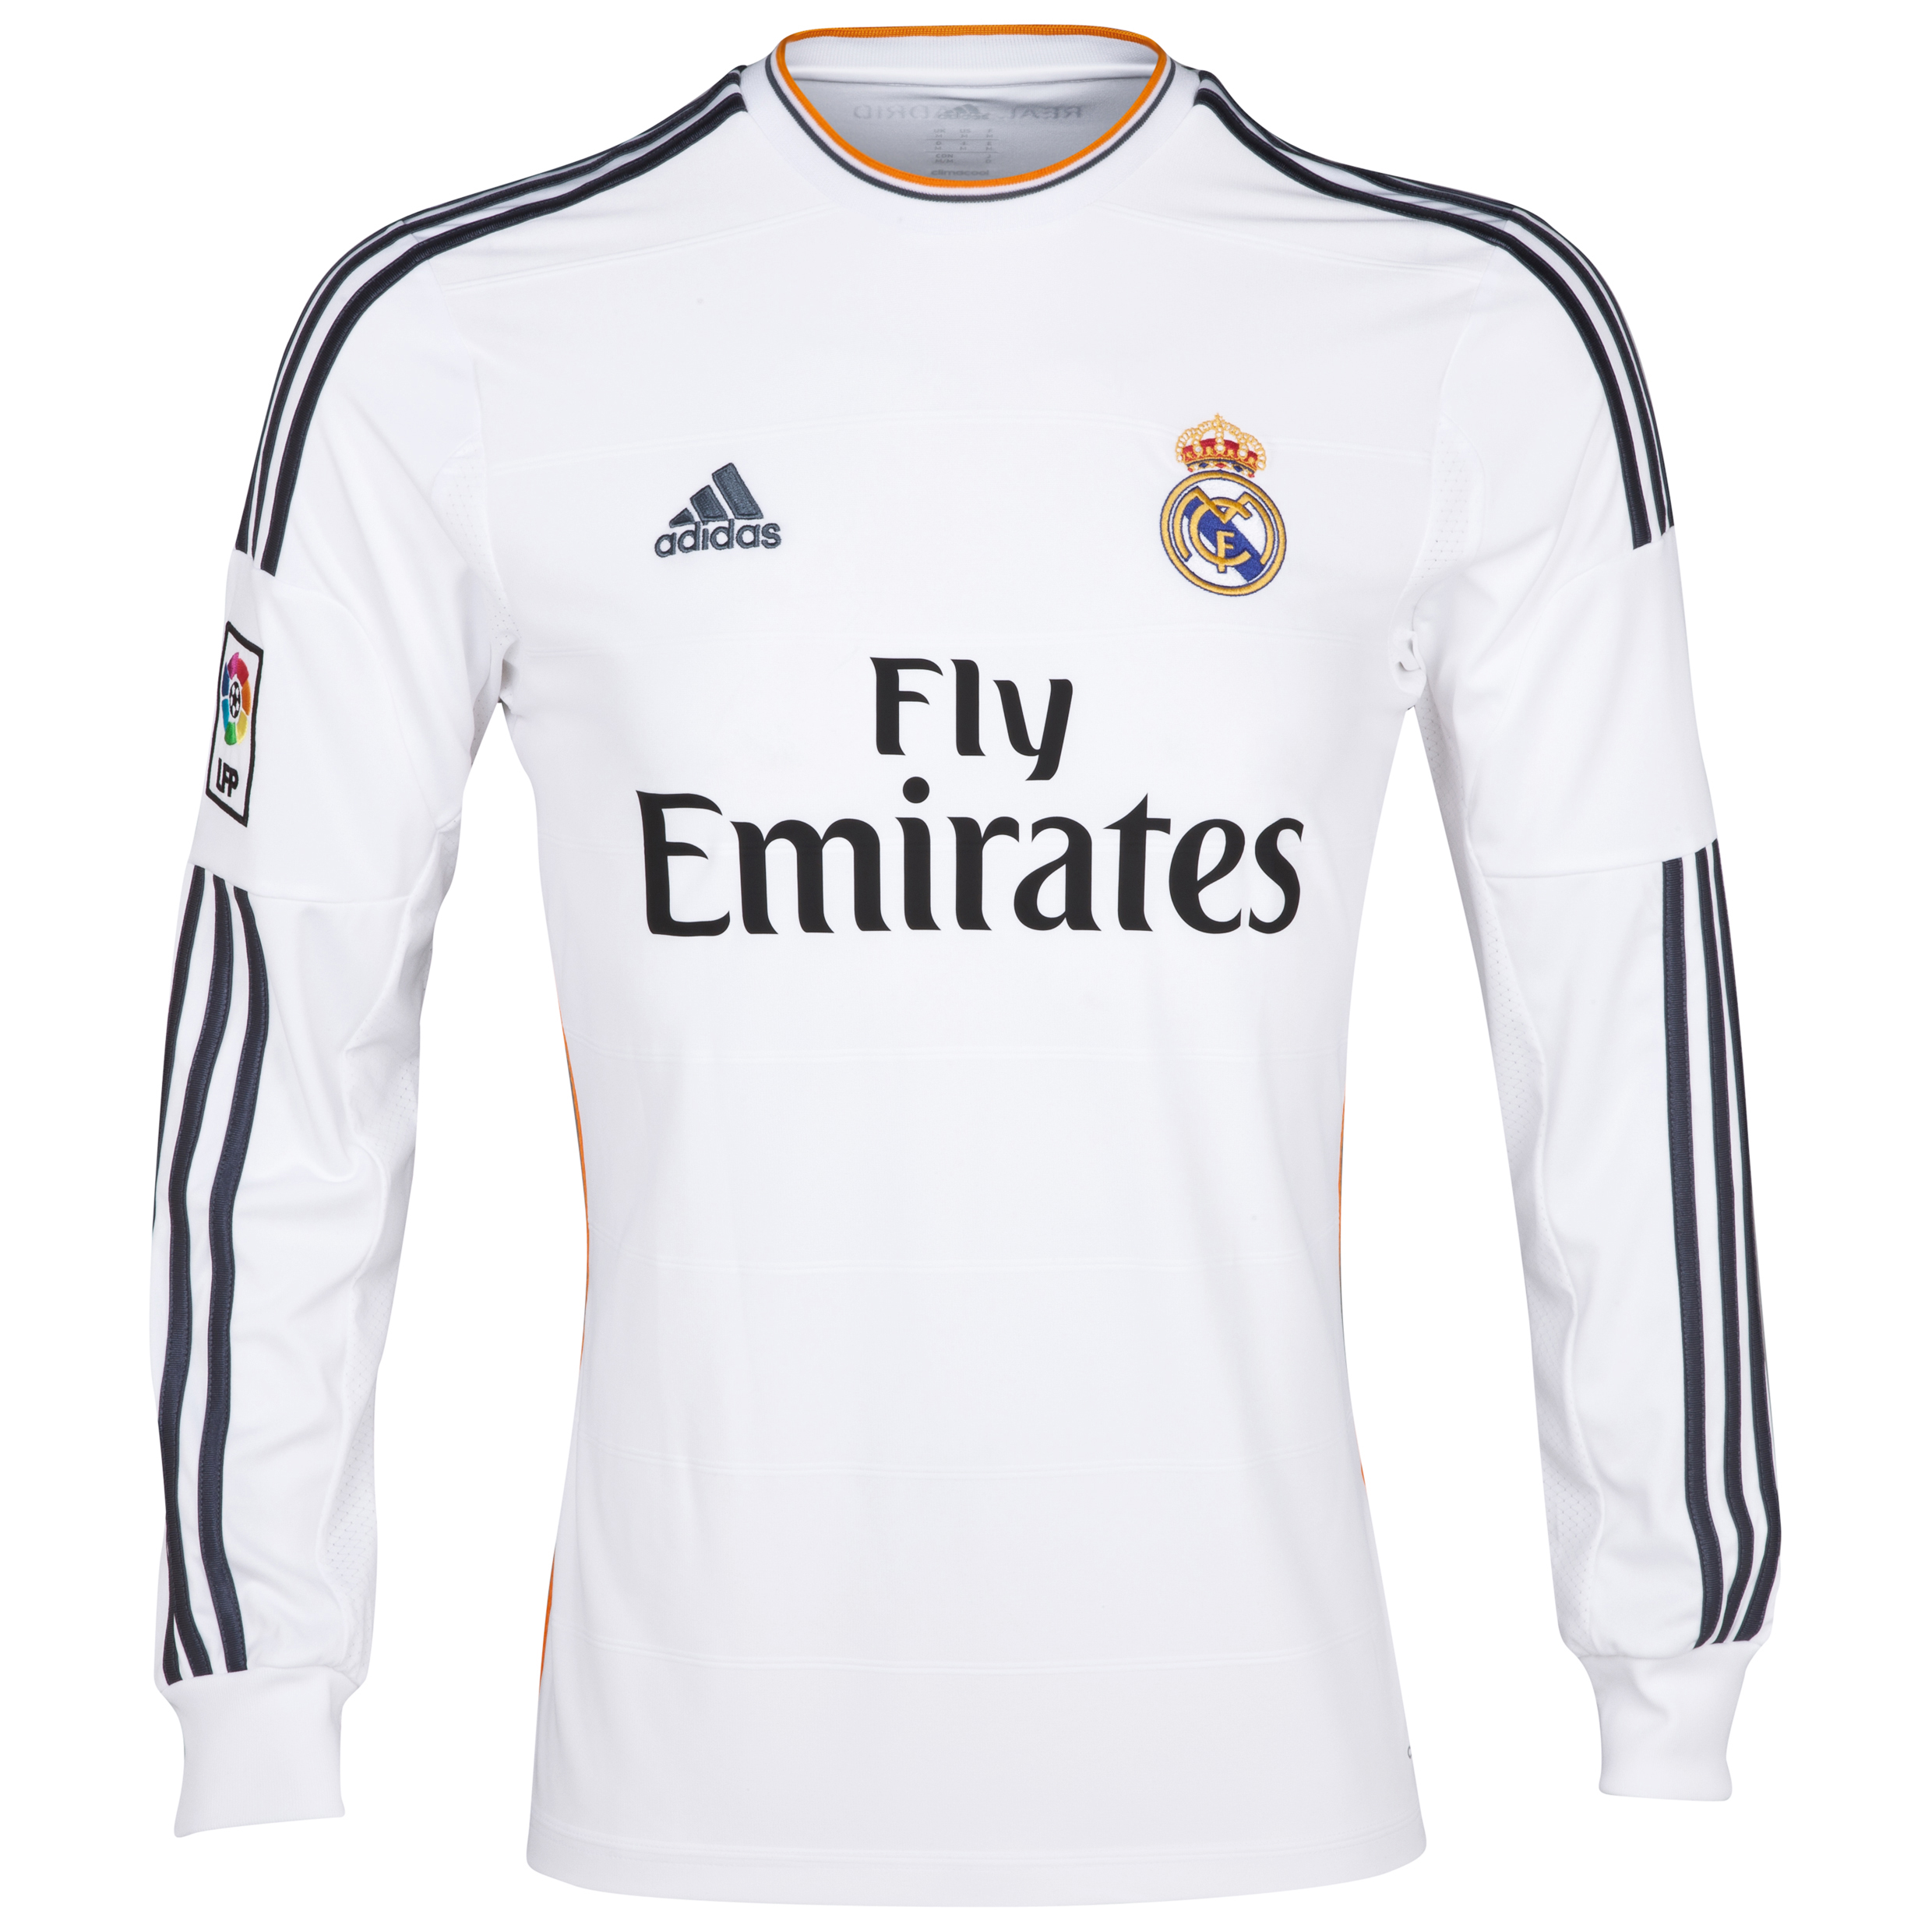 Real Madrid Home Shirt 2013/14 - Long Sleeve